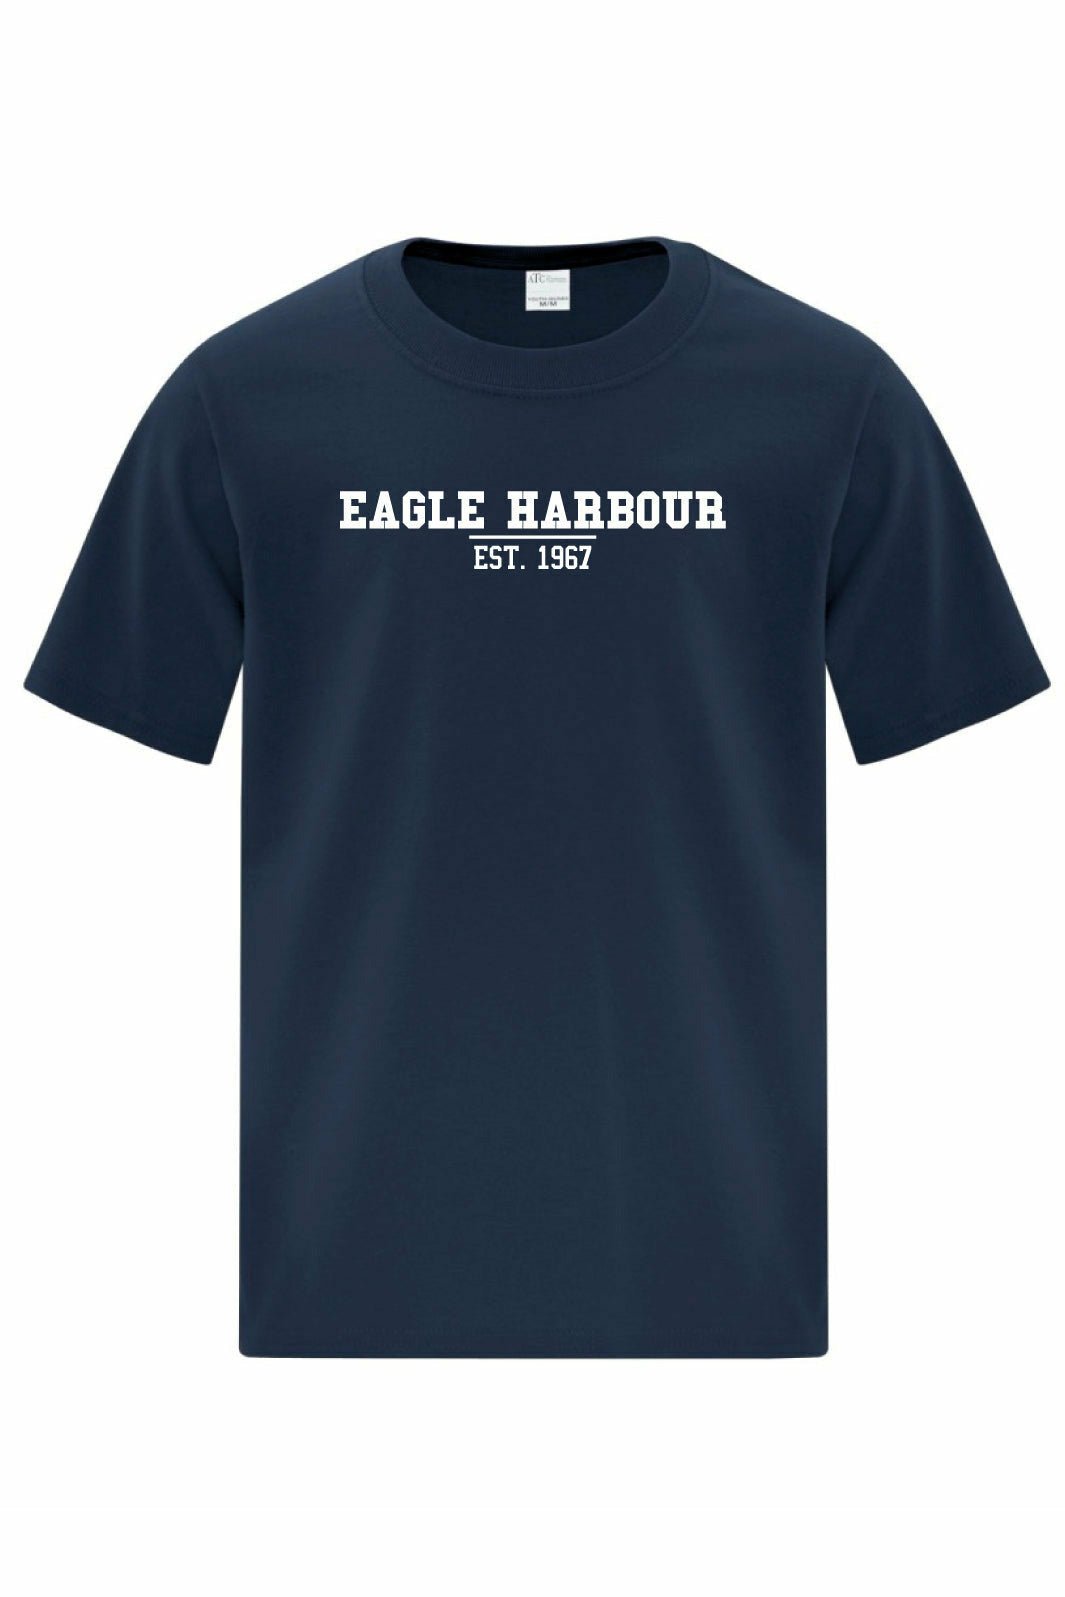 Eagle Harbour EST T-shirt (Youth) - Oddball Workshop